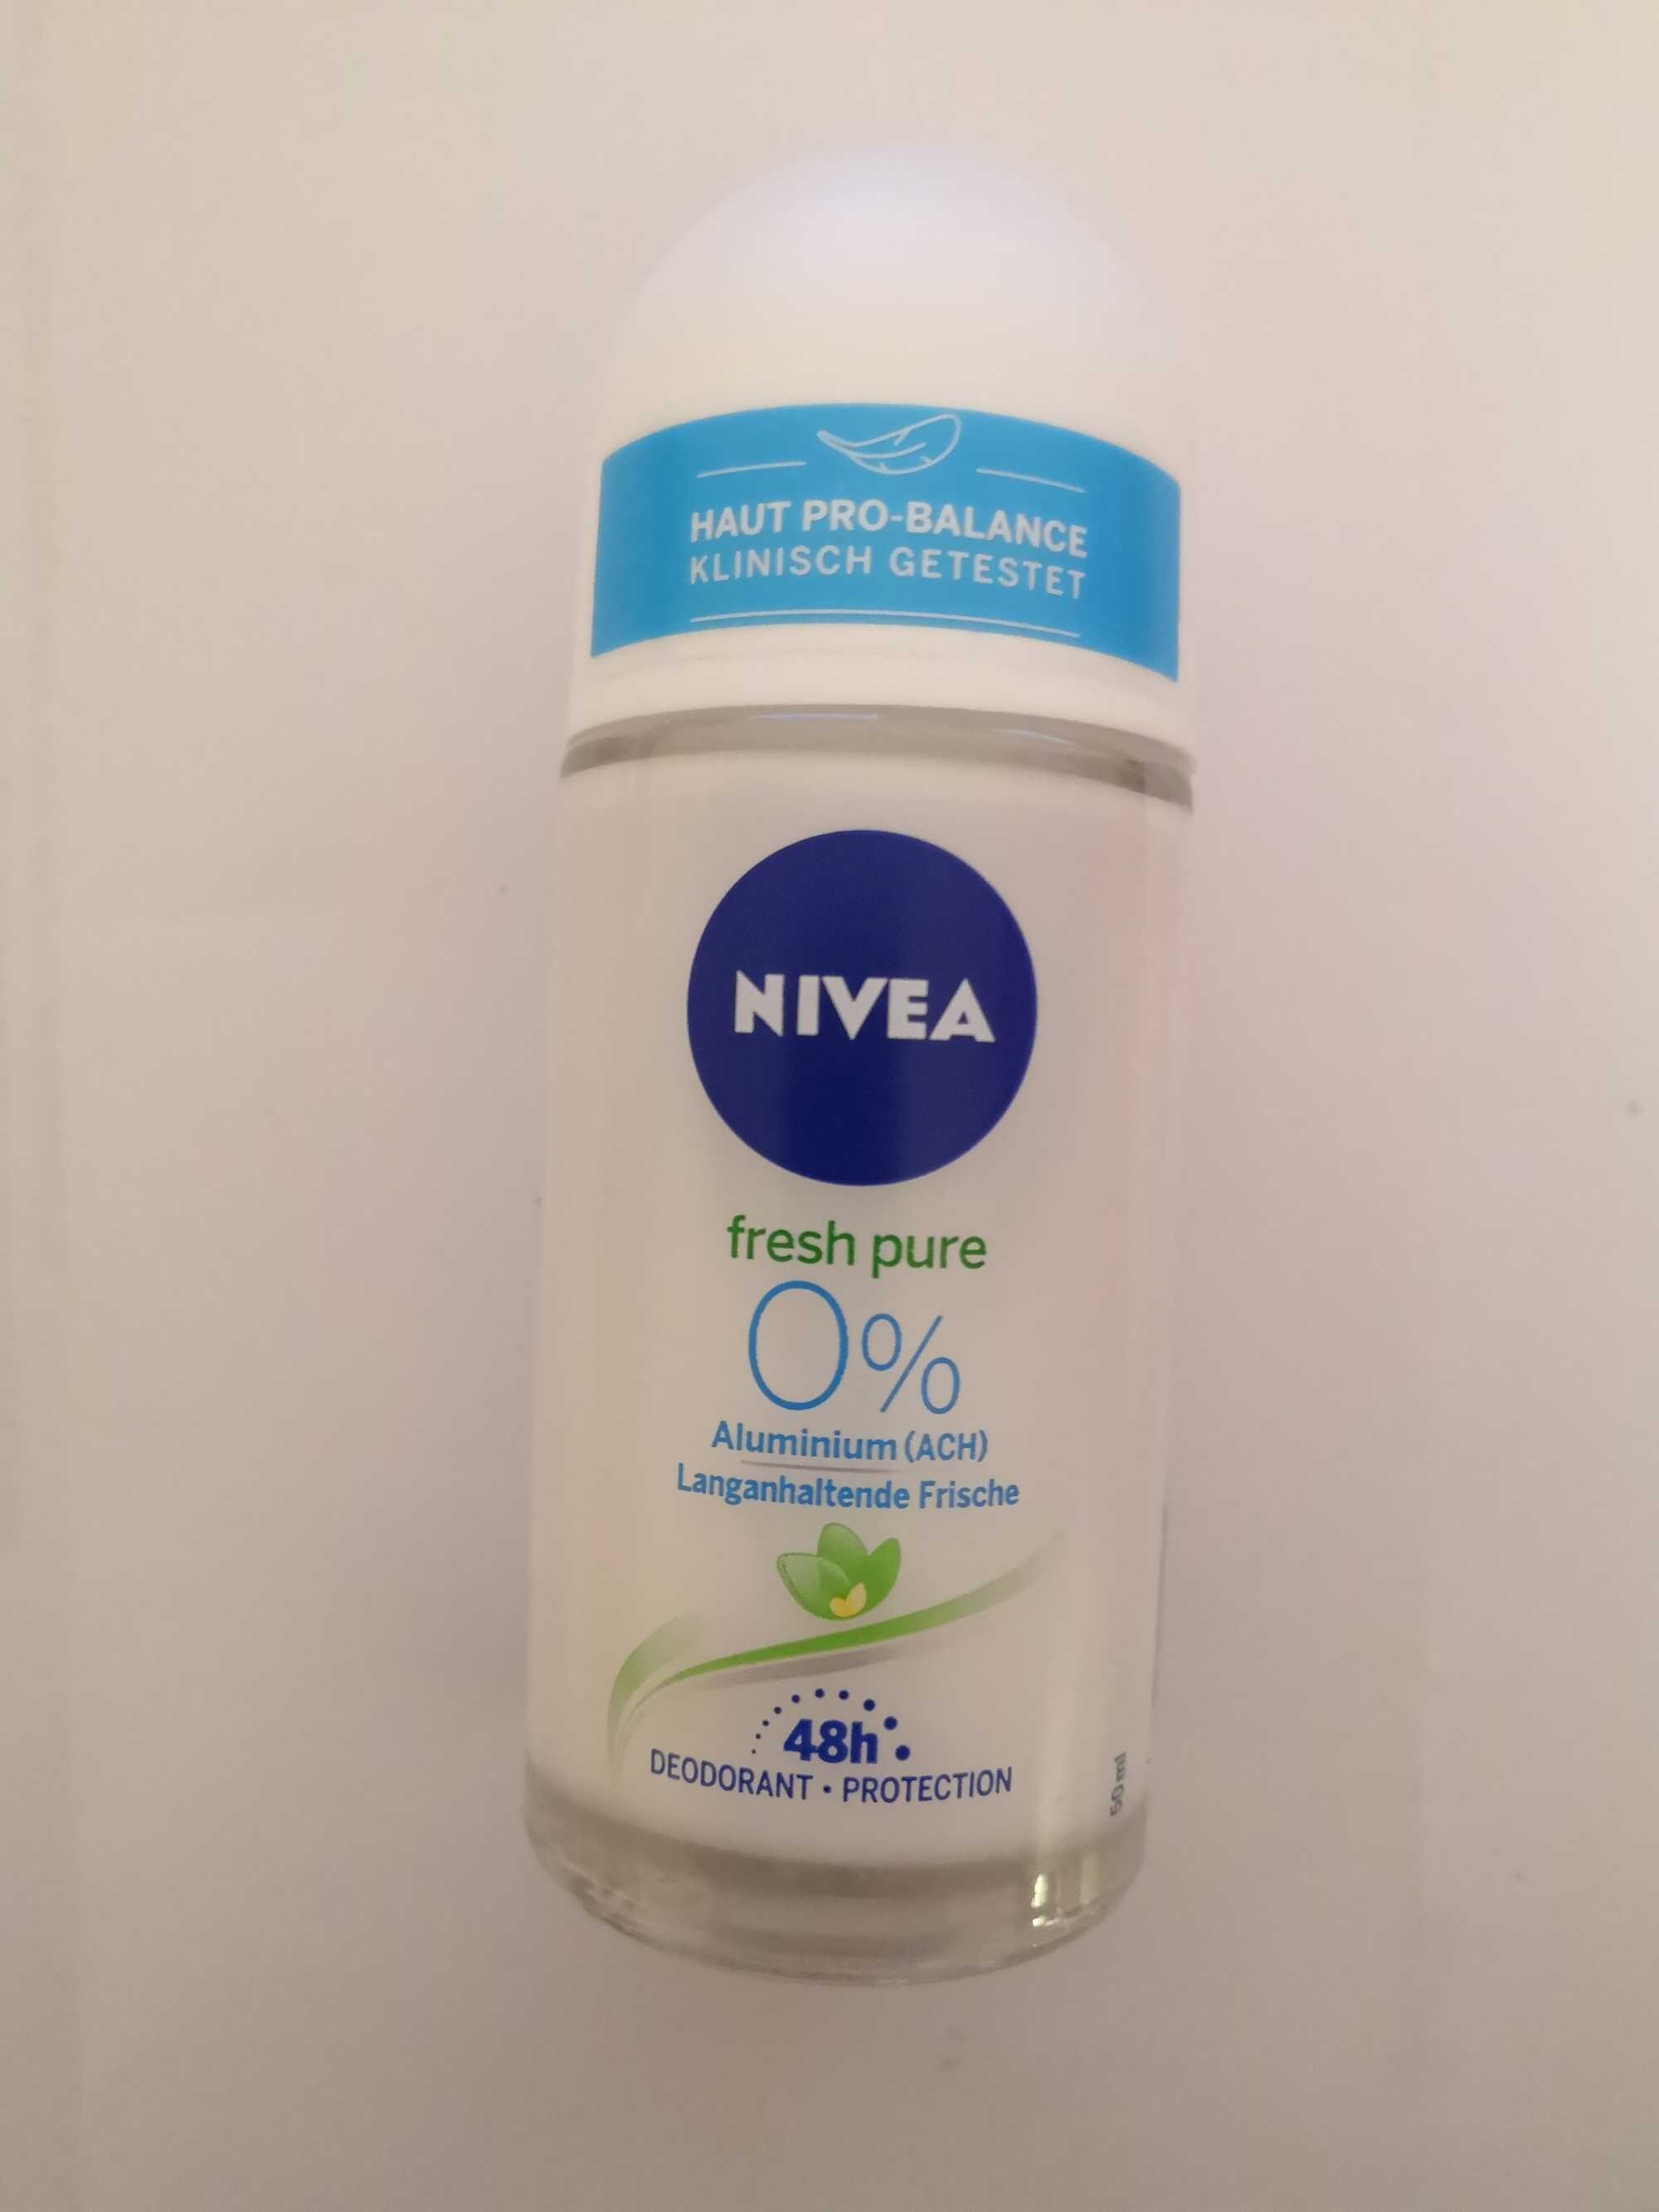 NIVEA fresh pure 0% Aluminium 48h Deodorant Protection - Product - de